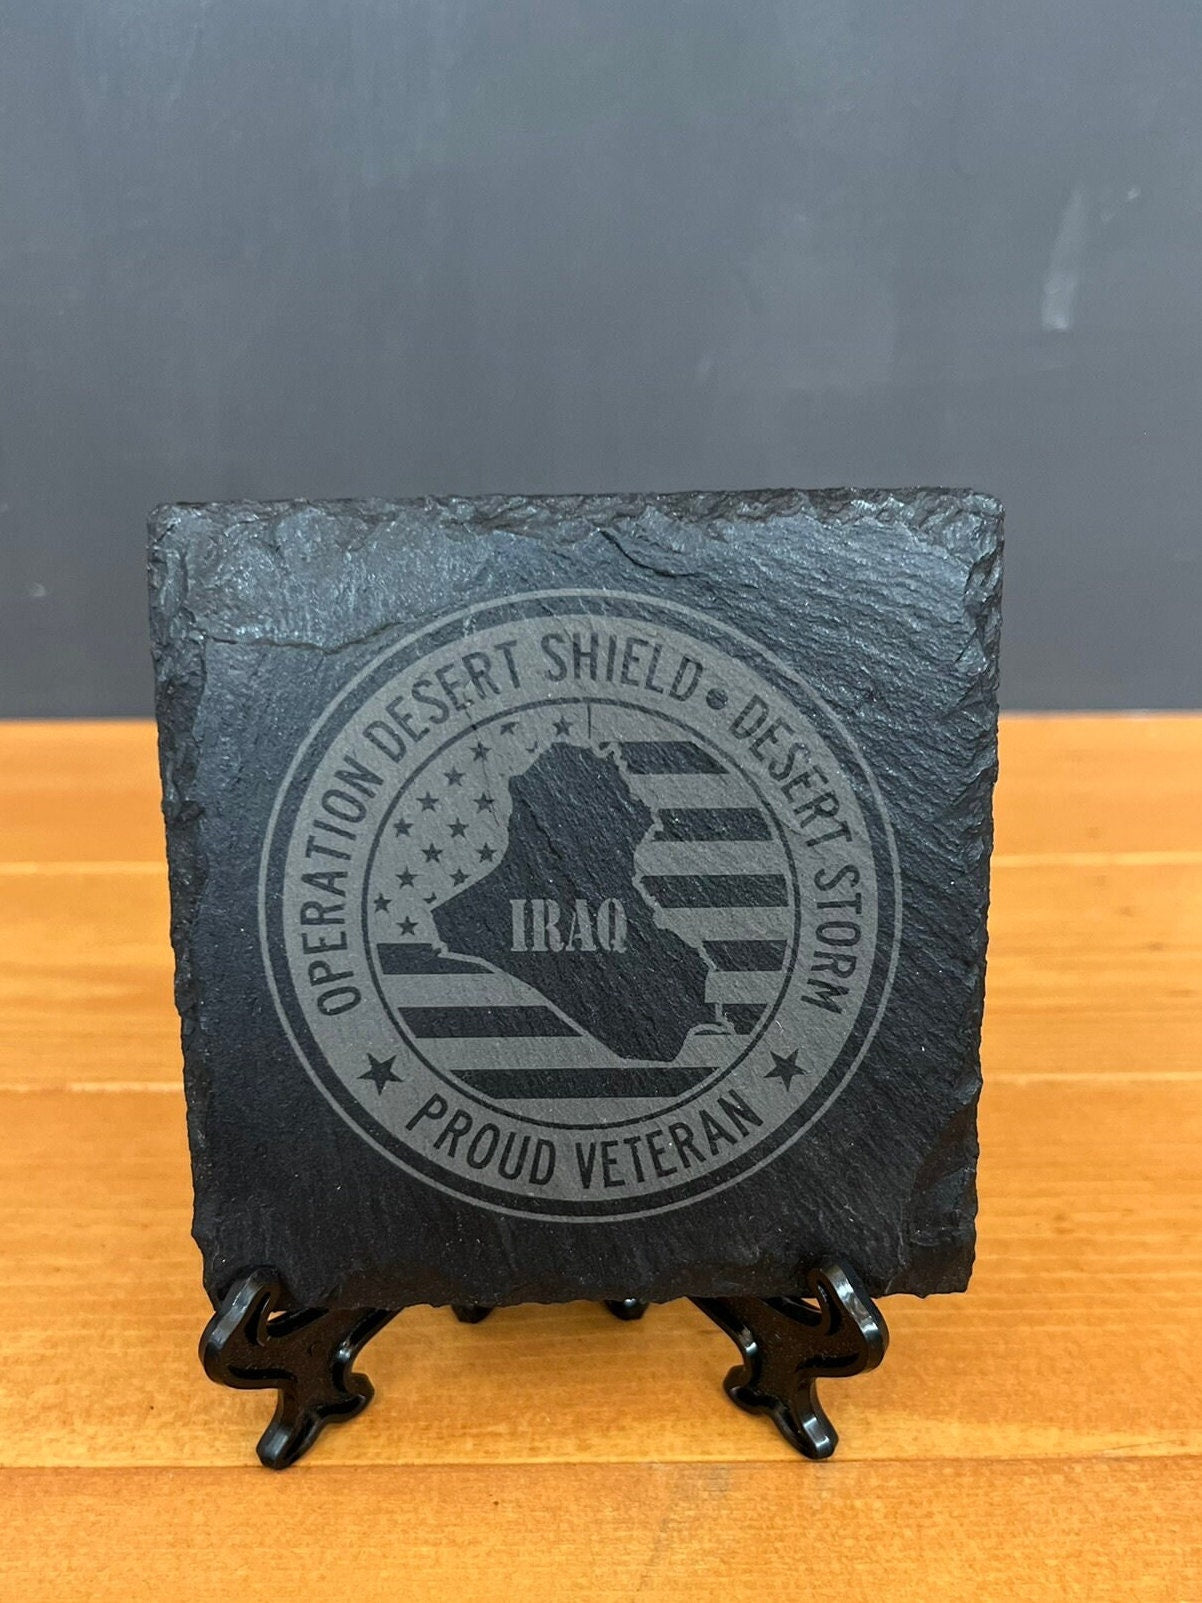 Laser Engraved Slate Coaster with Operation Desert Shield/ Storm Veteran logo.